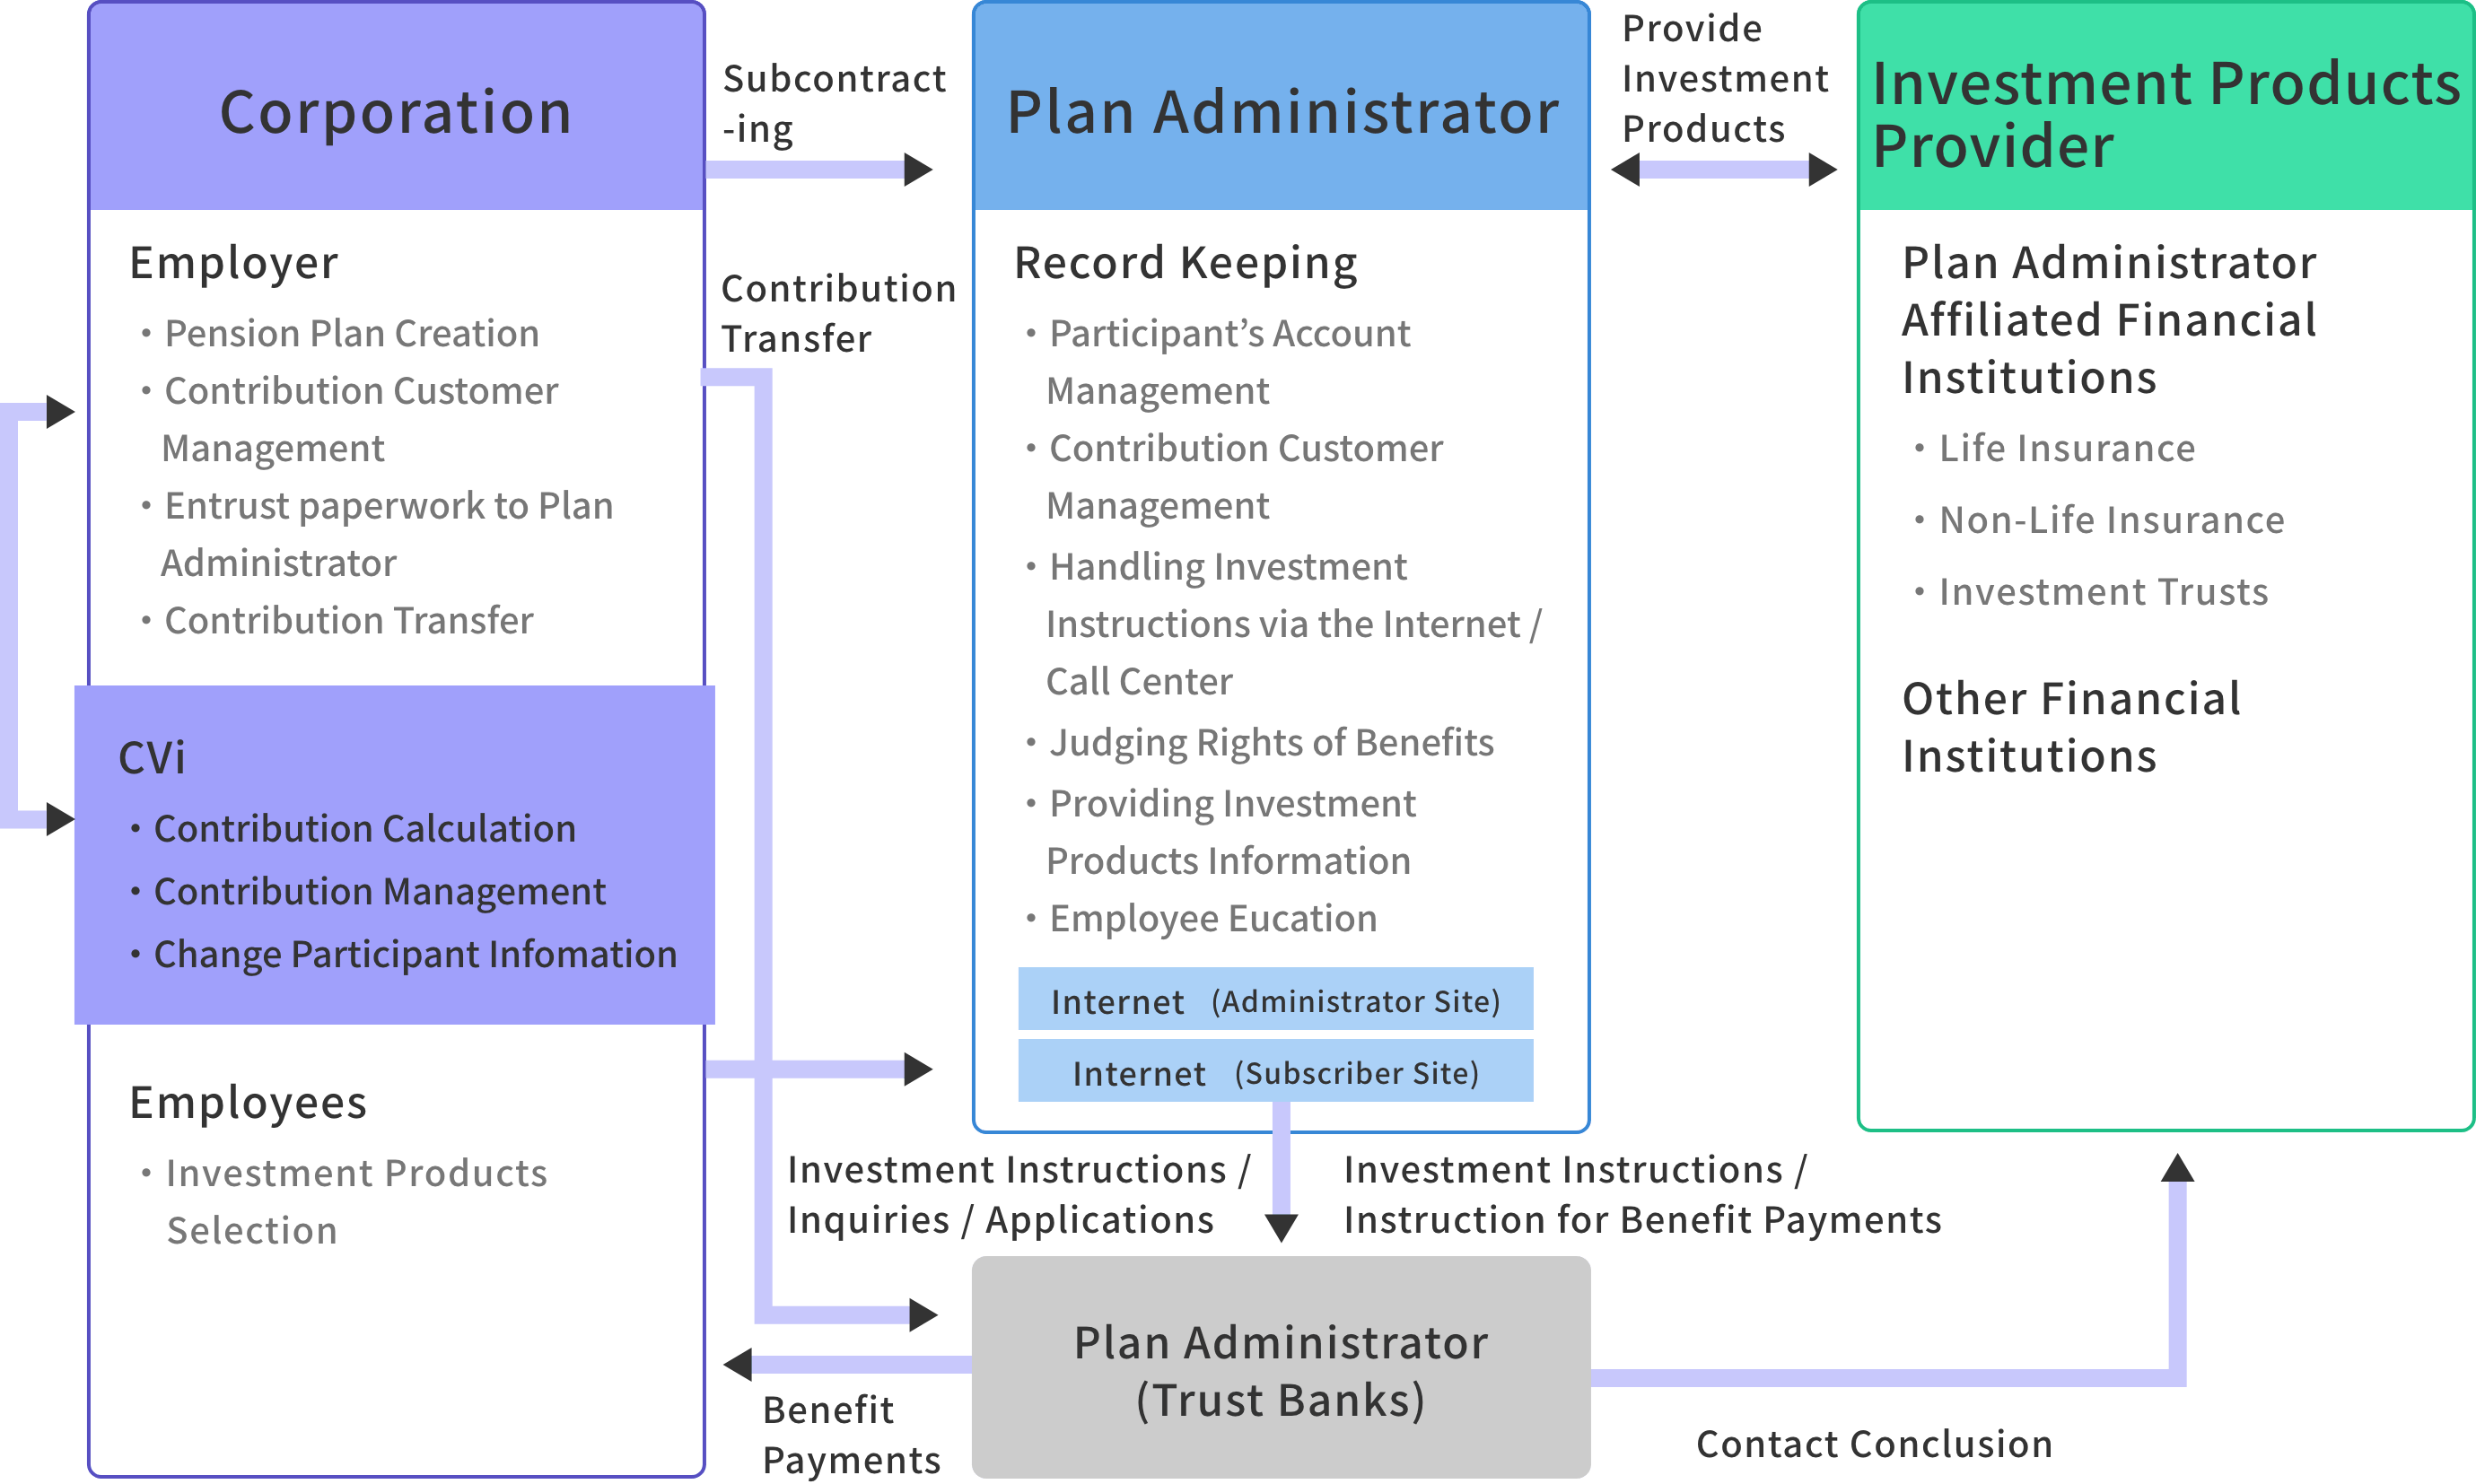 J401(k) & Cash Balance Plan Administration